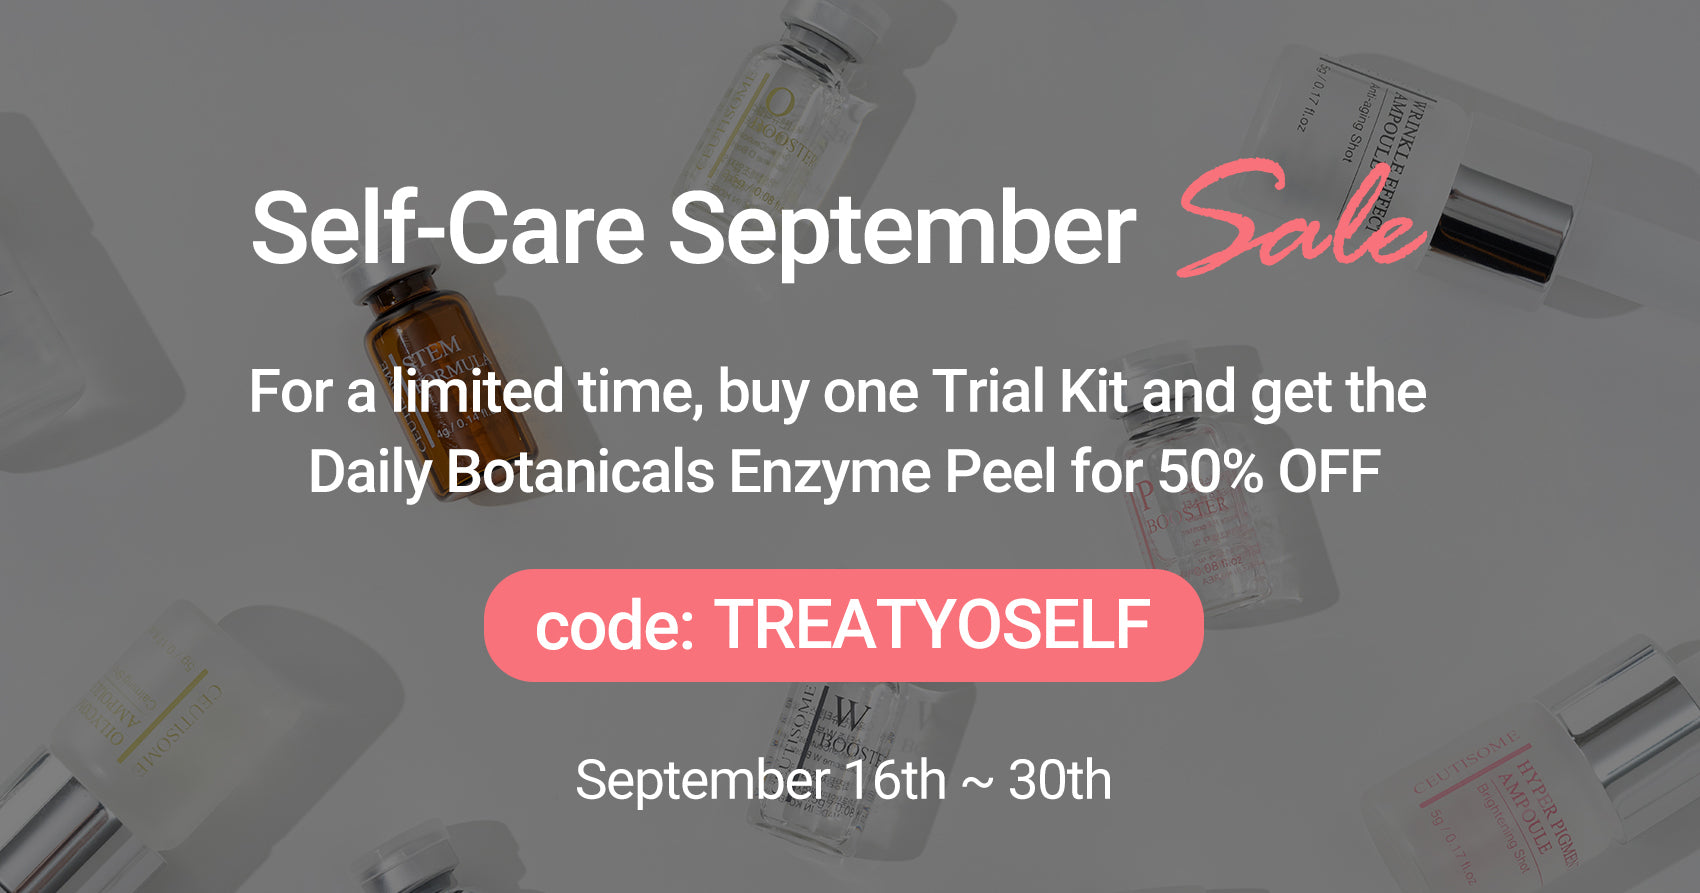 Self-Care September Sale